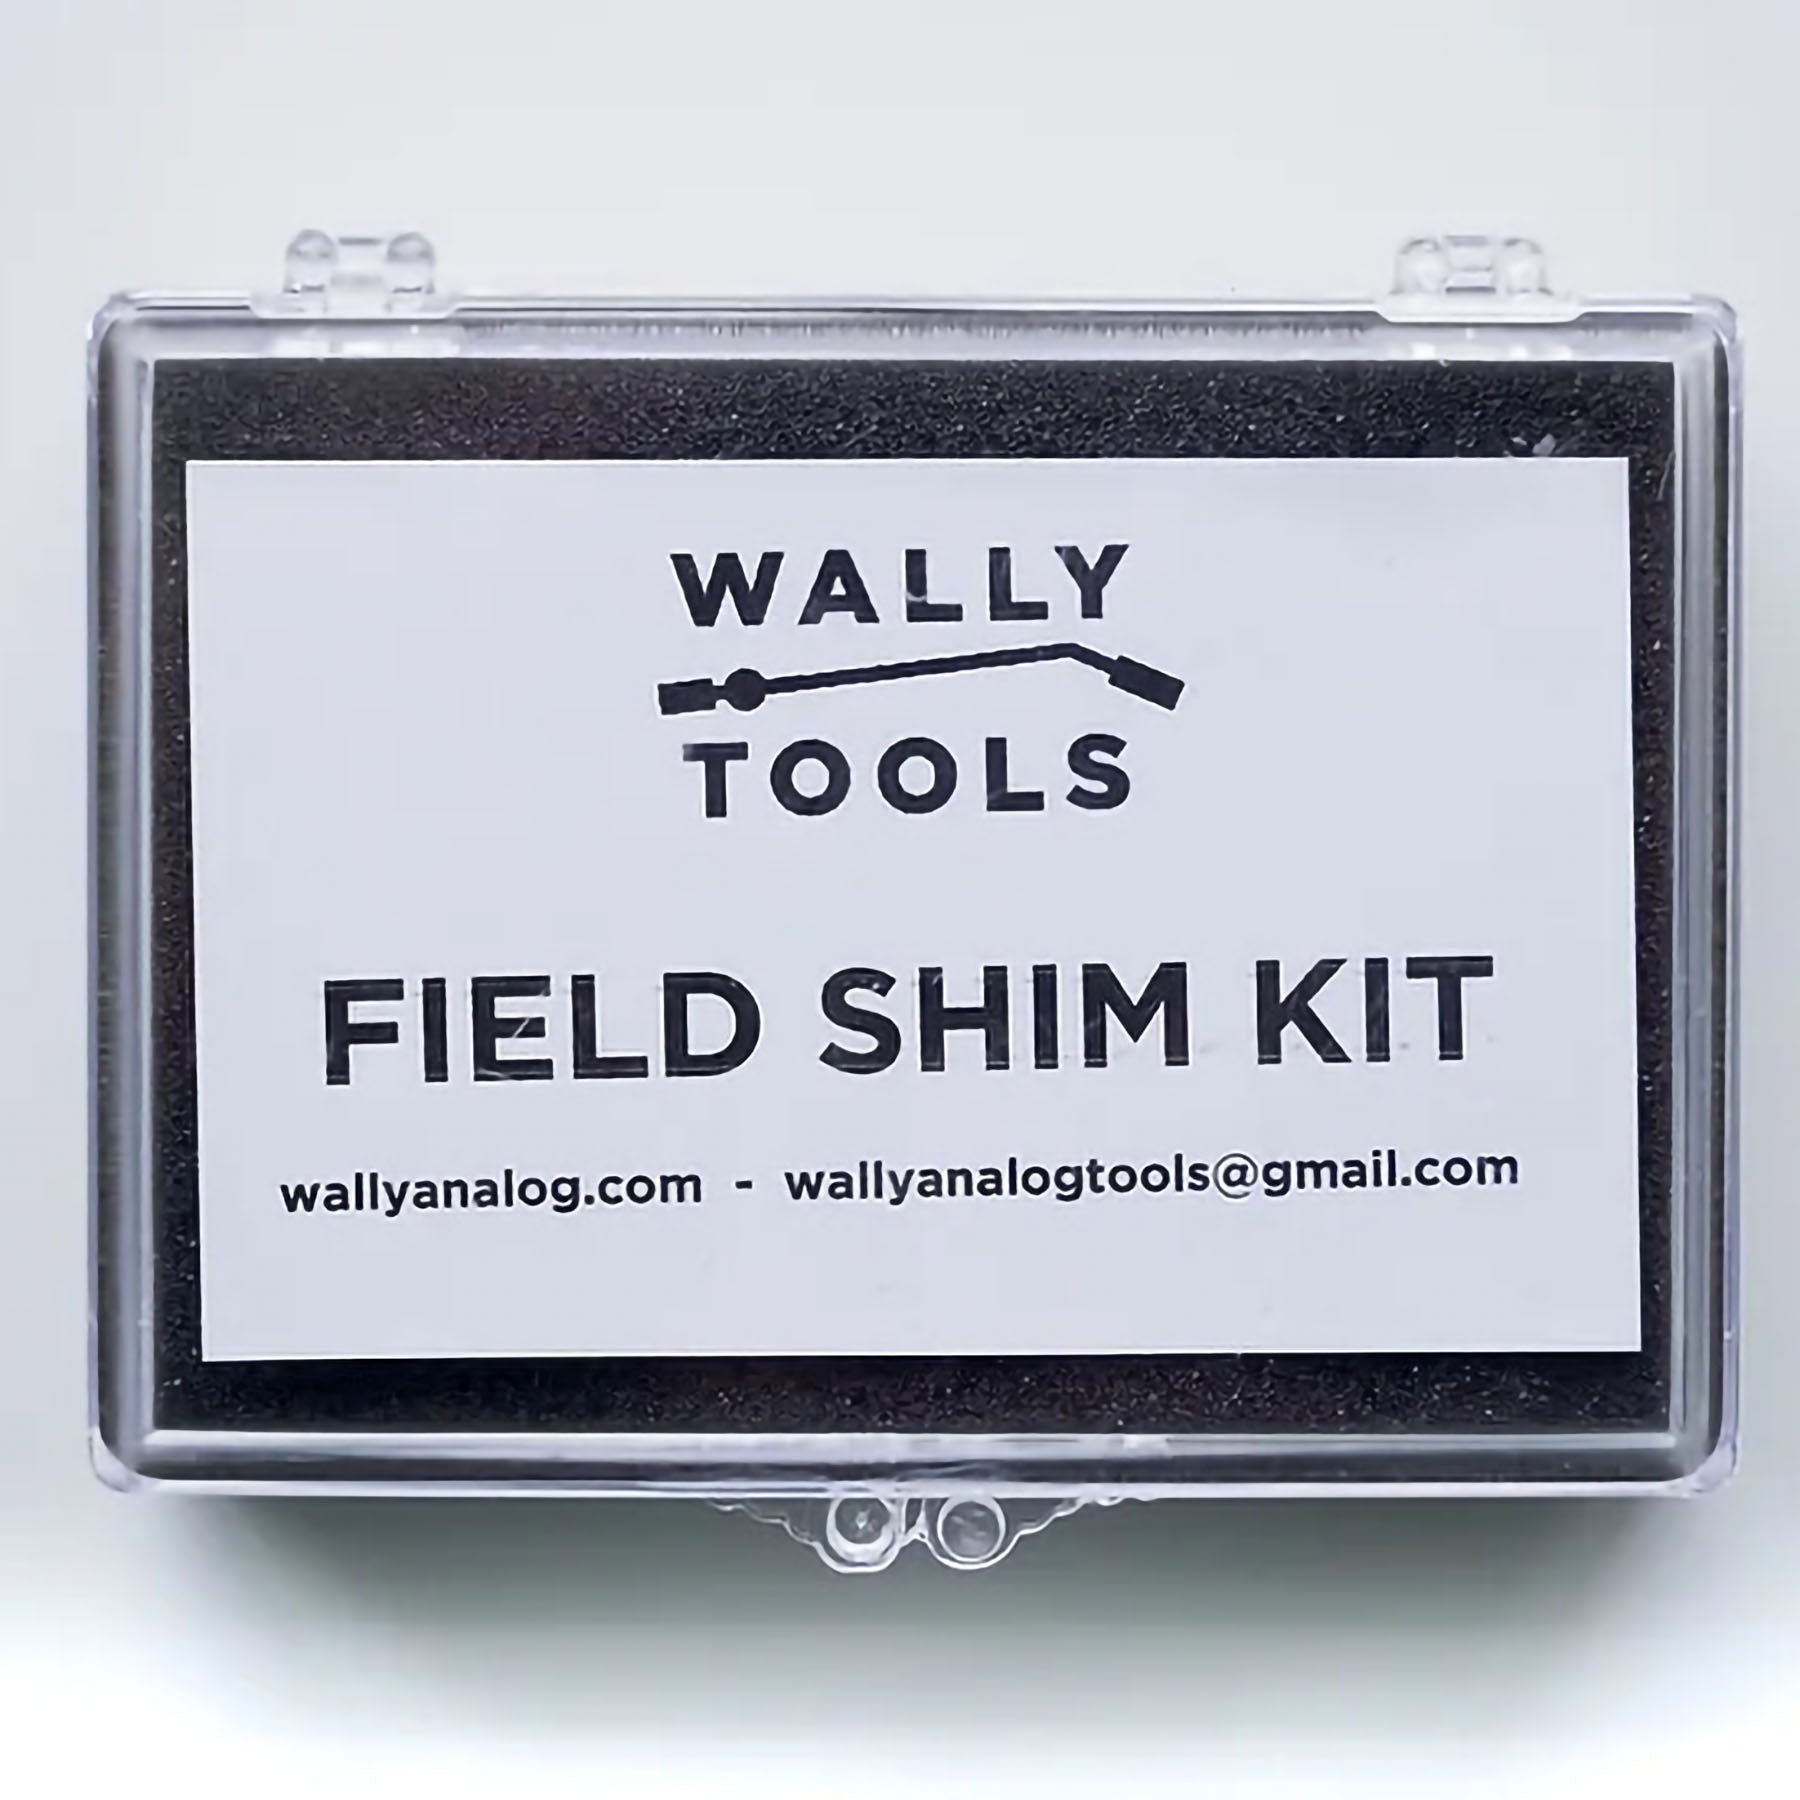 WallyTools Field Shim Kit